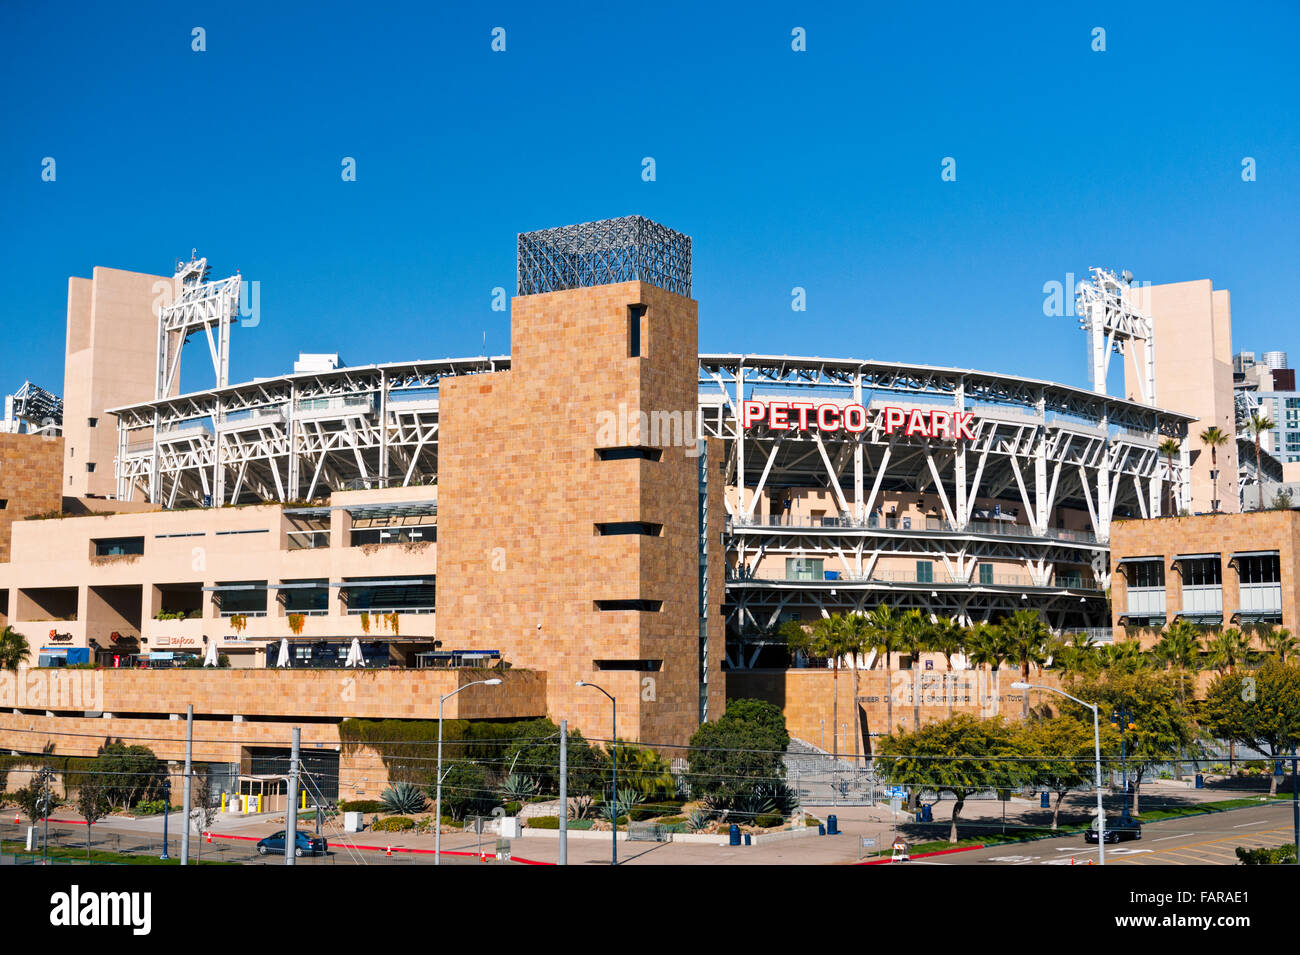 Petco Park baseball stadium in downtown San Diego, California Stock Photo